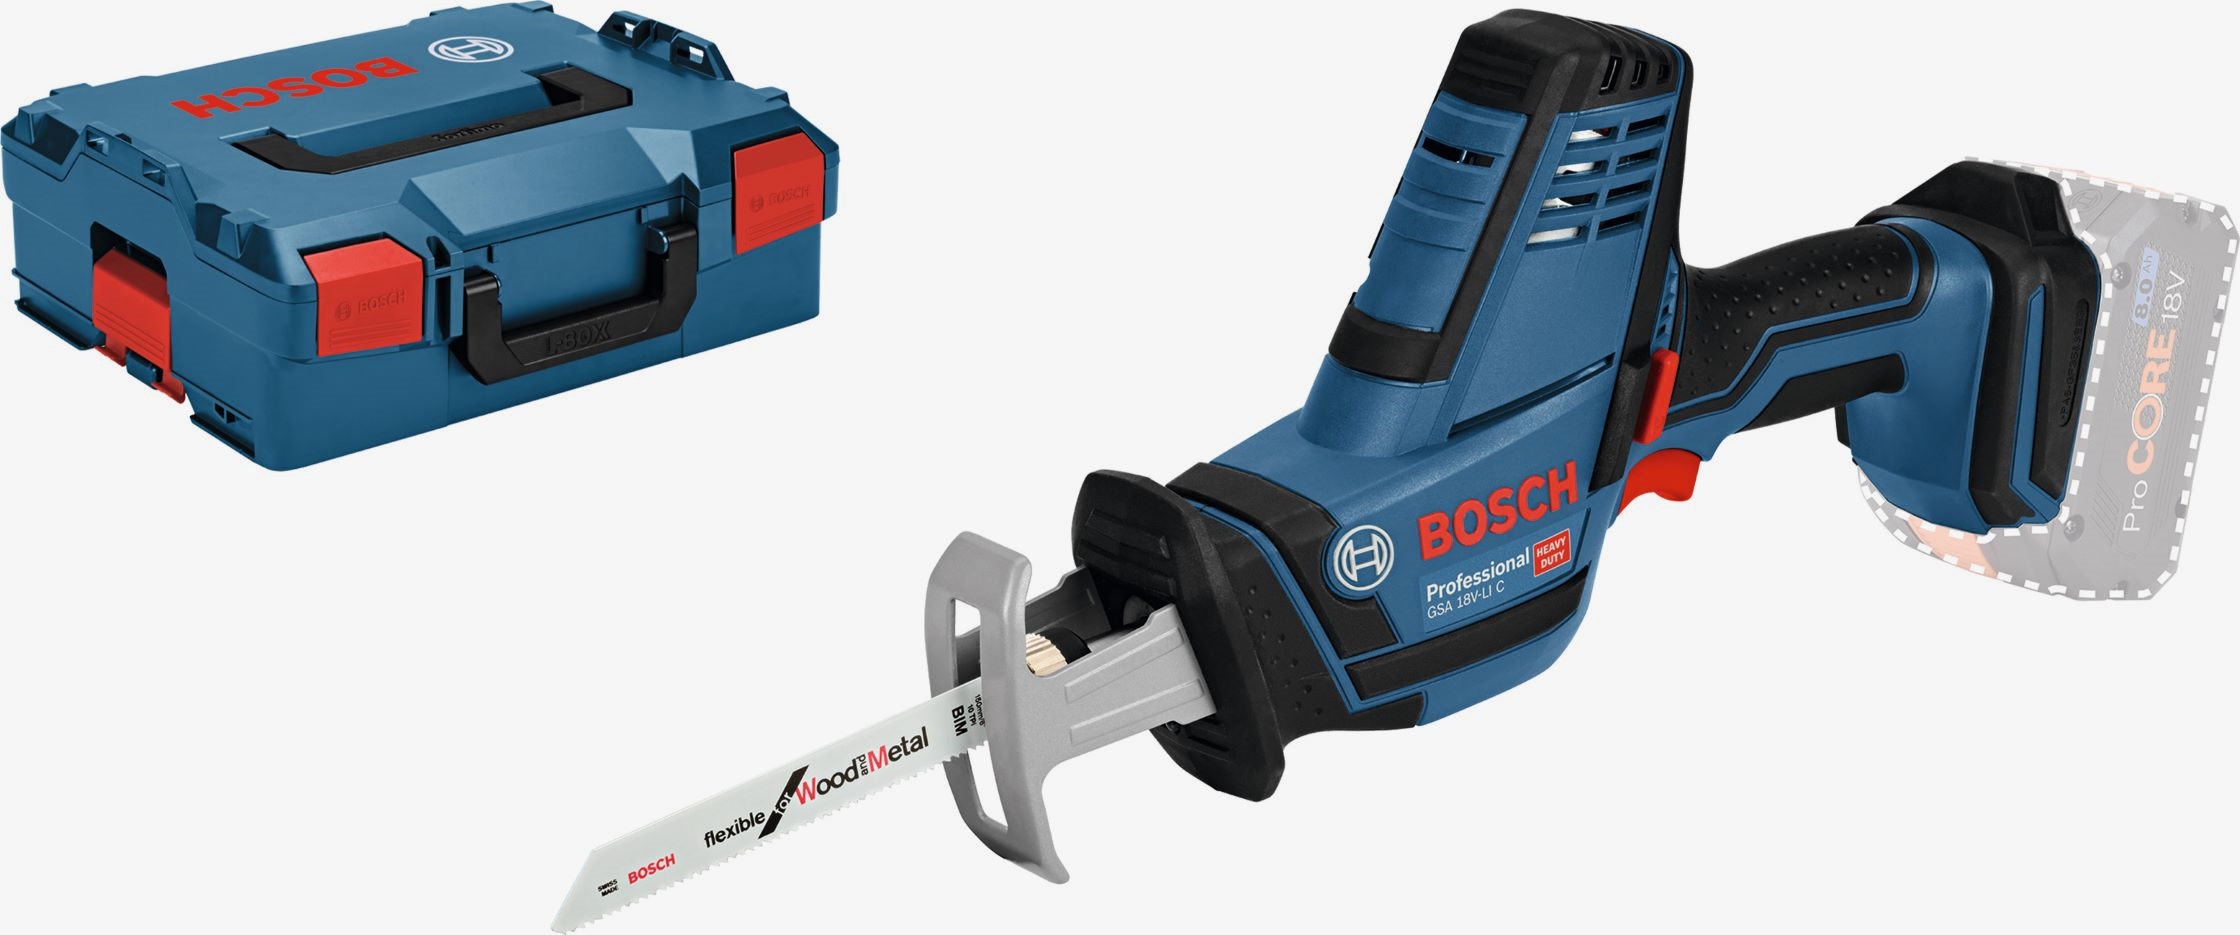 GSA 18 V-LI C Professional Cordless Reciprocating Saw Bosch - 2